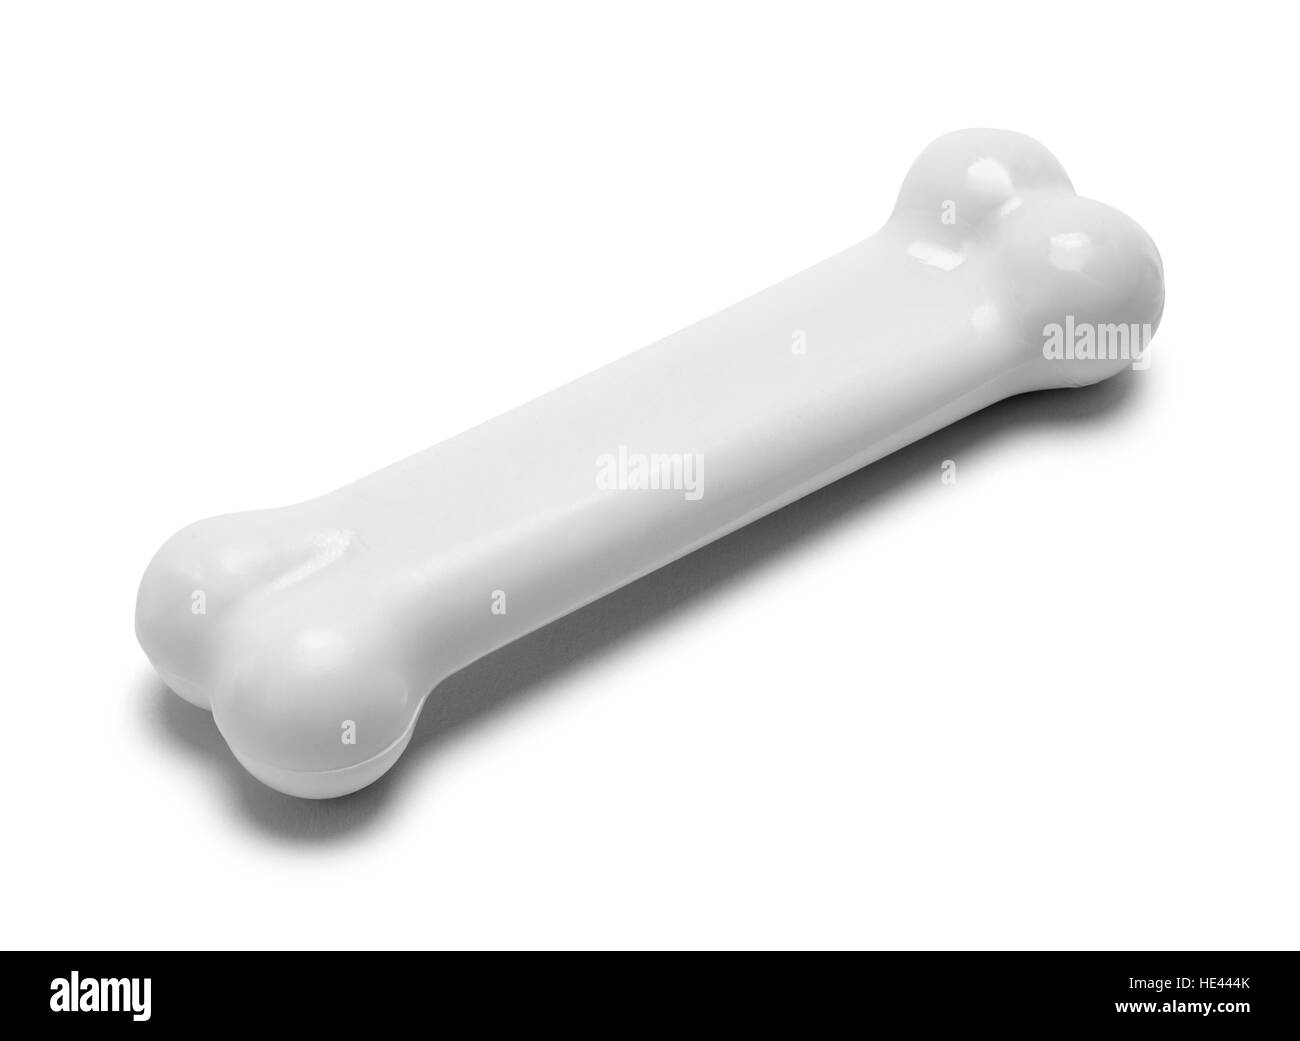 Hundeknochen mit textfreiraum Isolated on White Background. Stockfoto